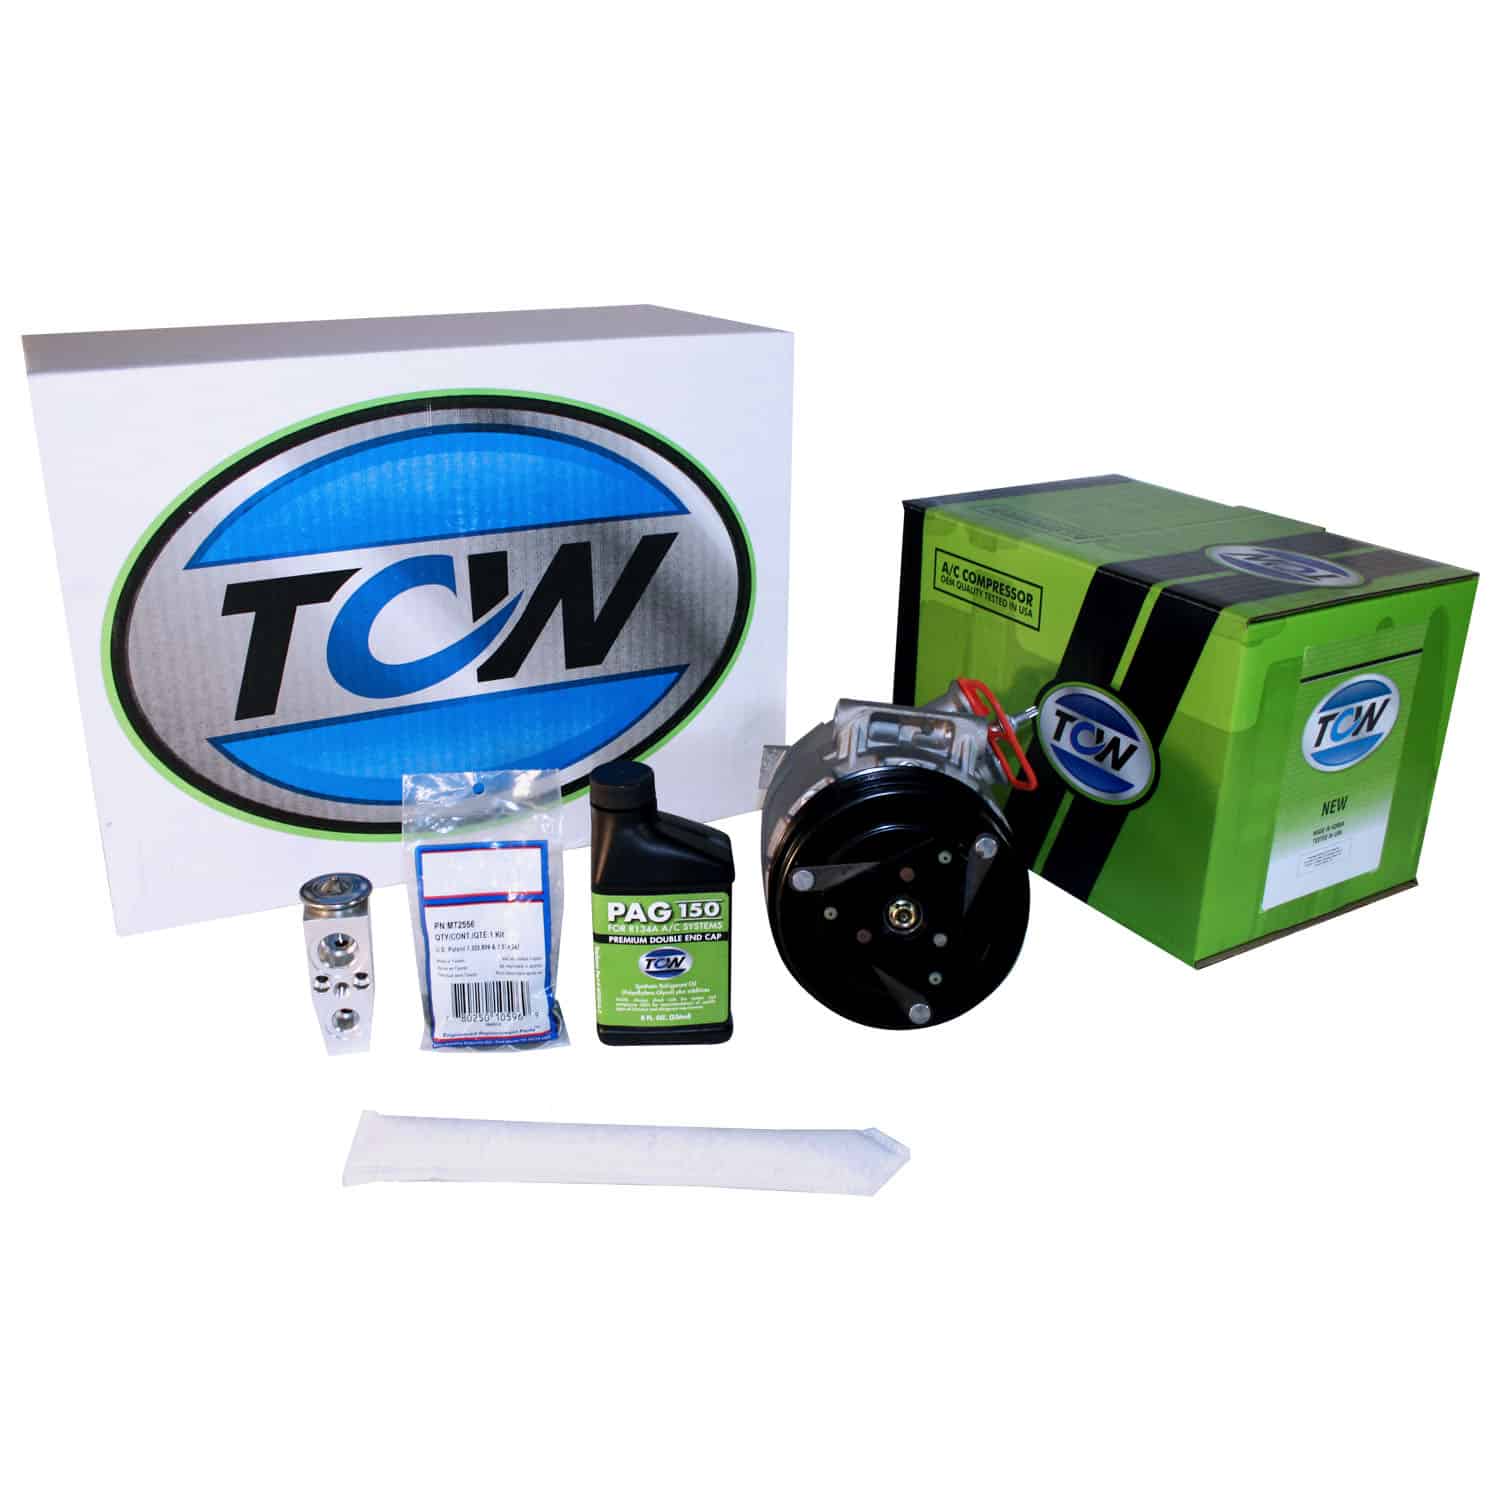 TCW Vehicle A/C Kit K1000223N New Product Image field_60b6a13a6e67c